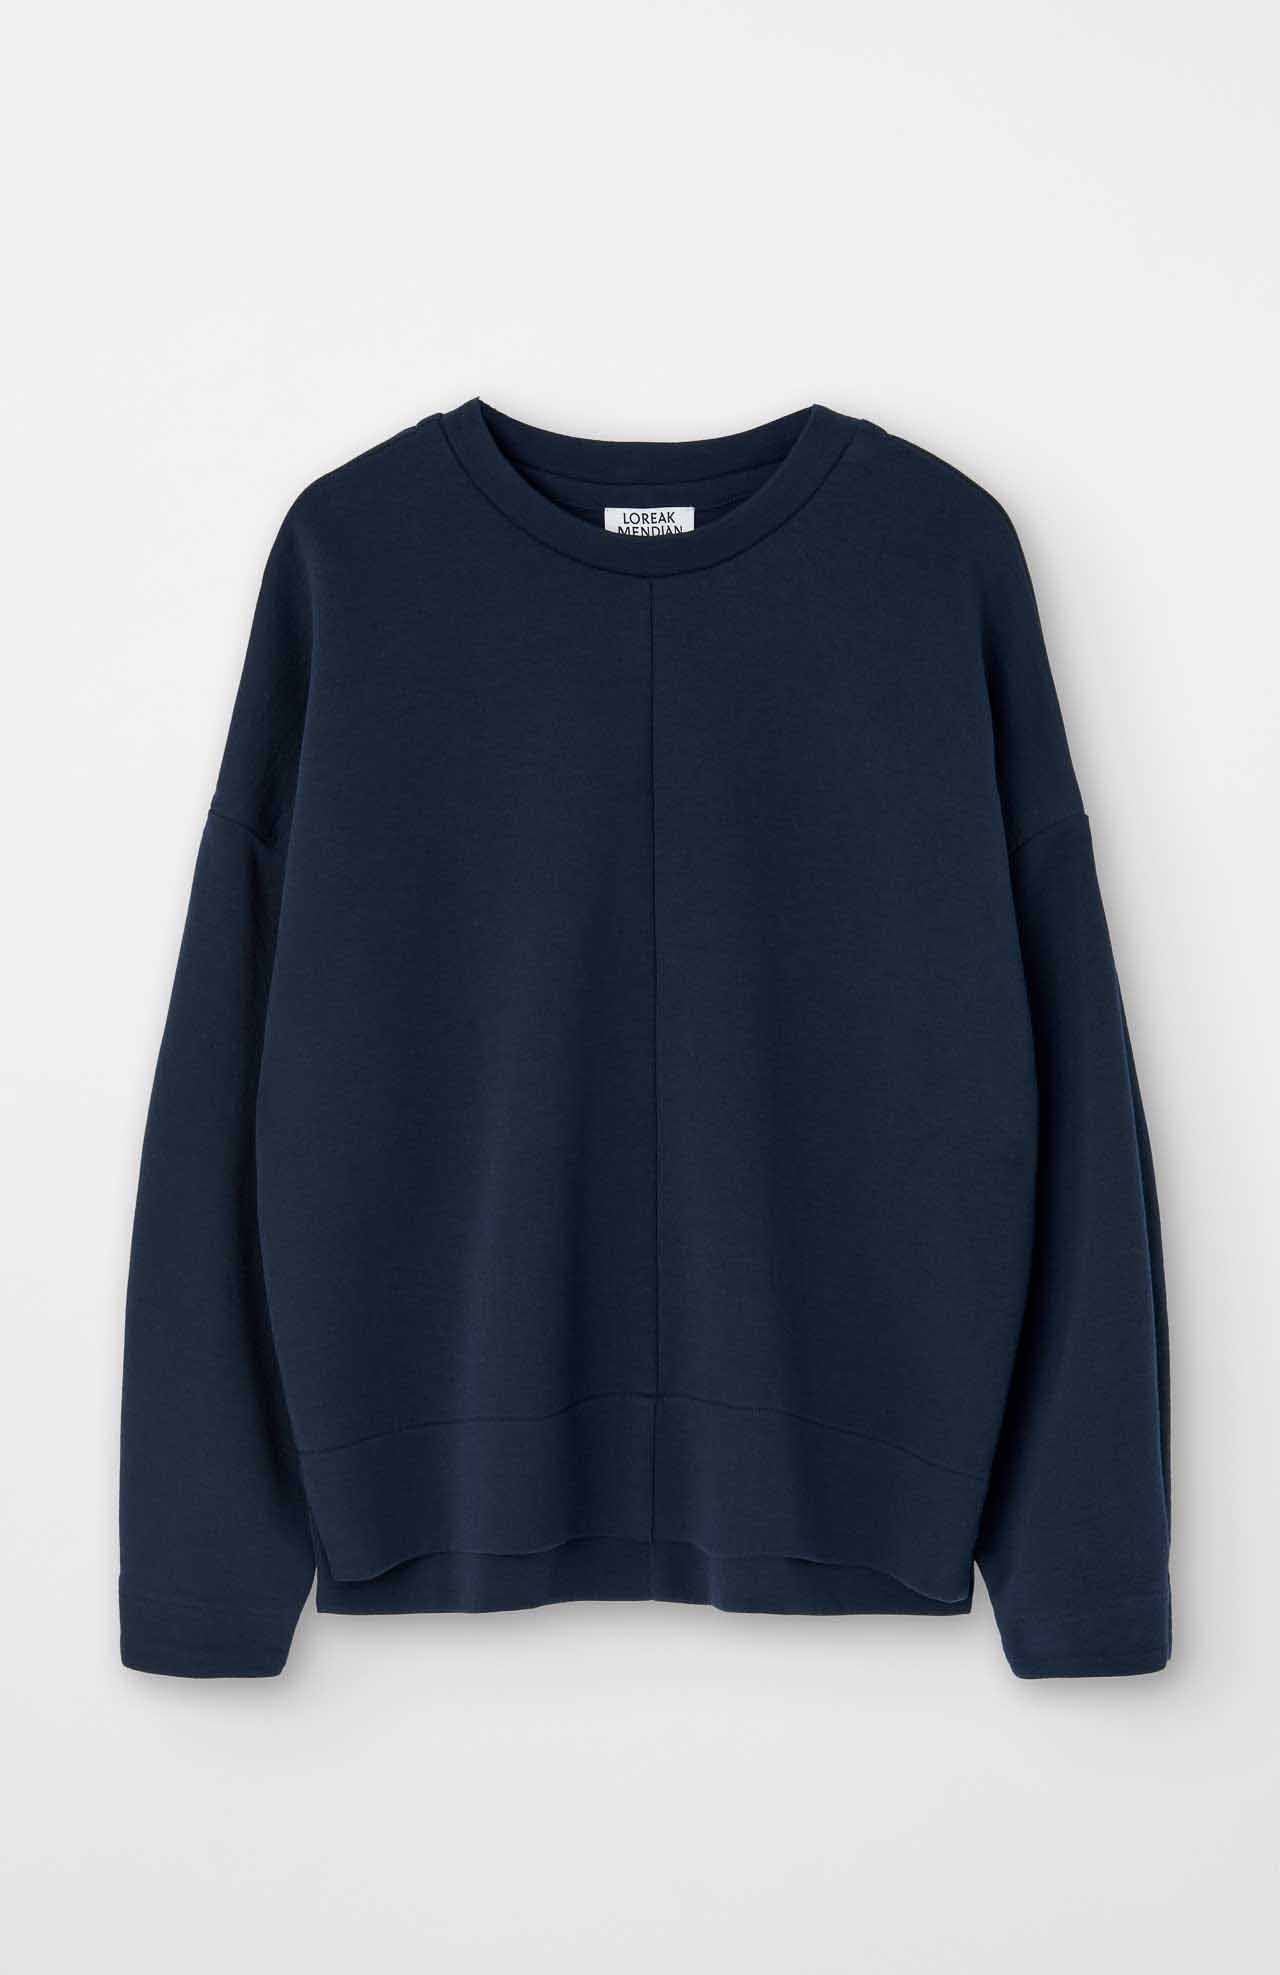 Flat product shot of navy sweater loreak mendian